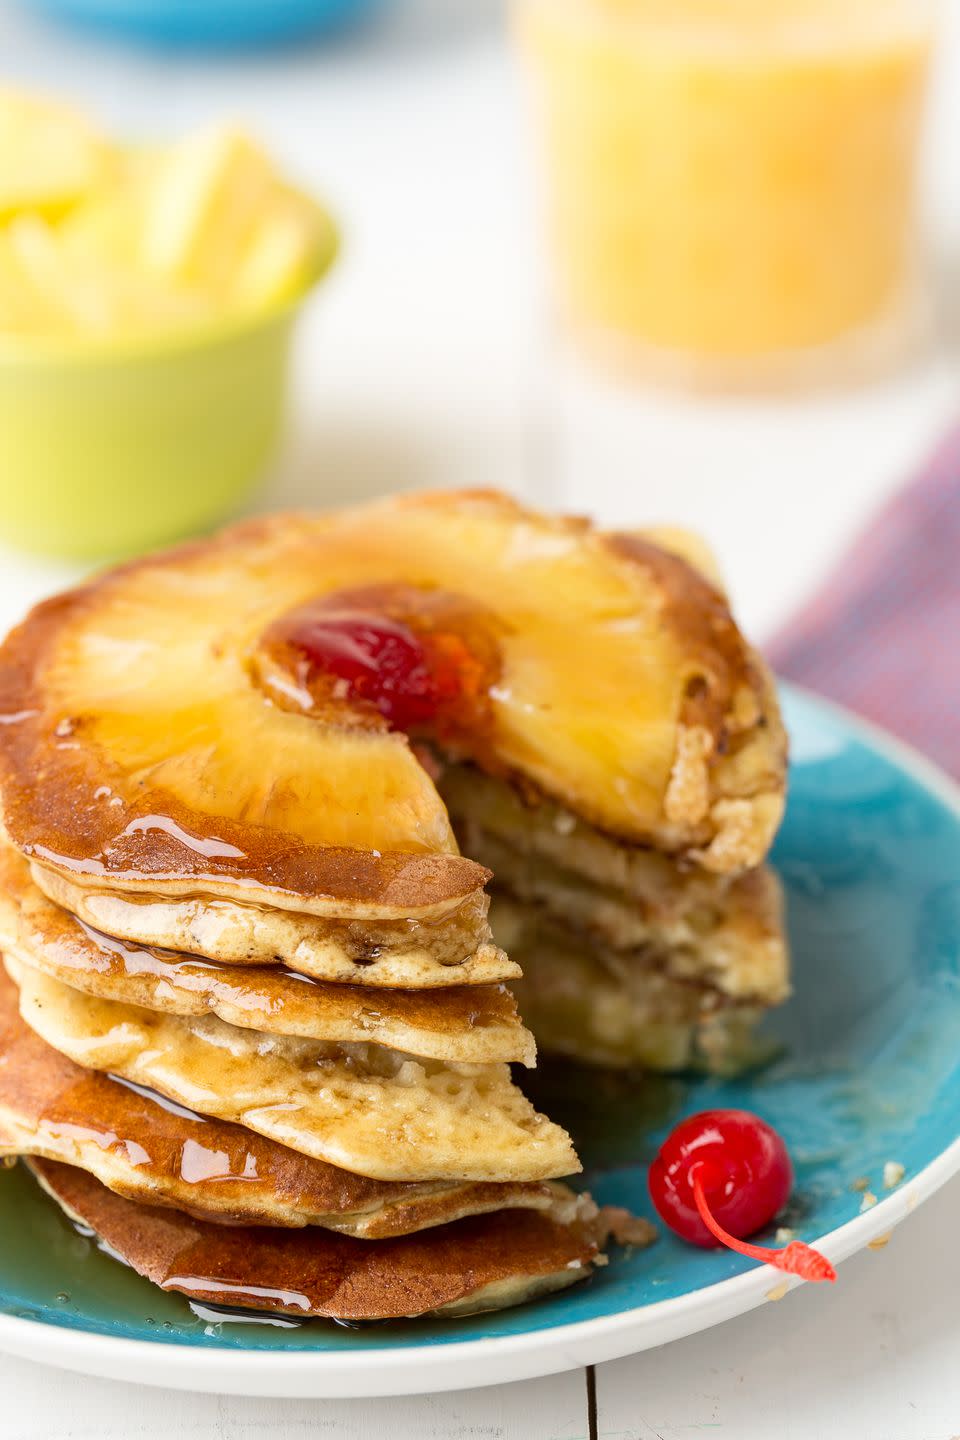 74) Pineapple Upside-Down Pancakes